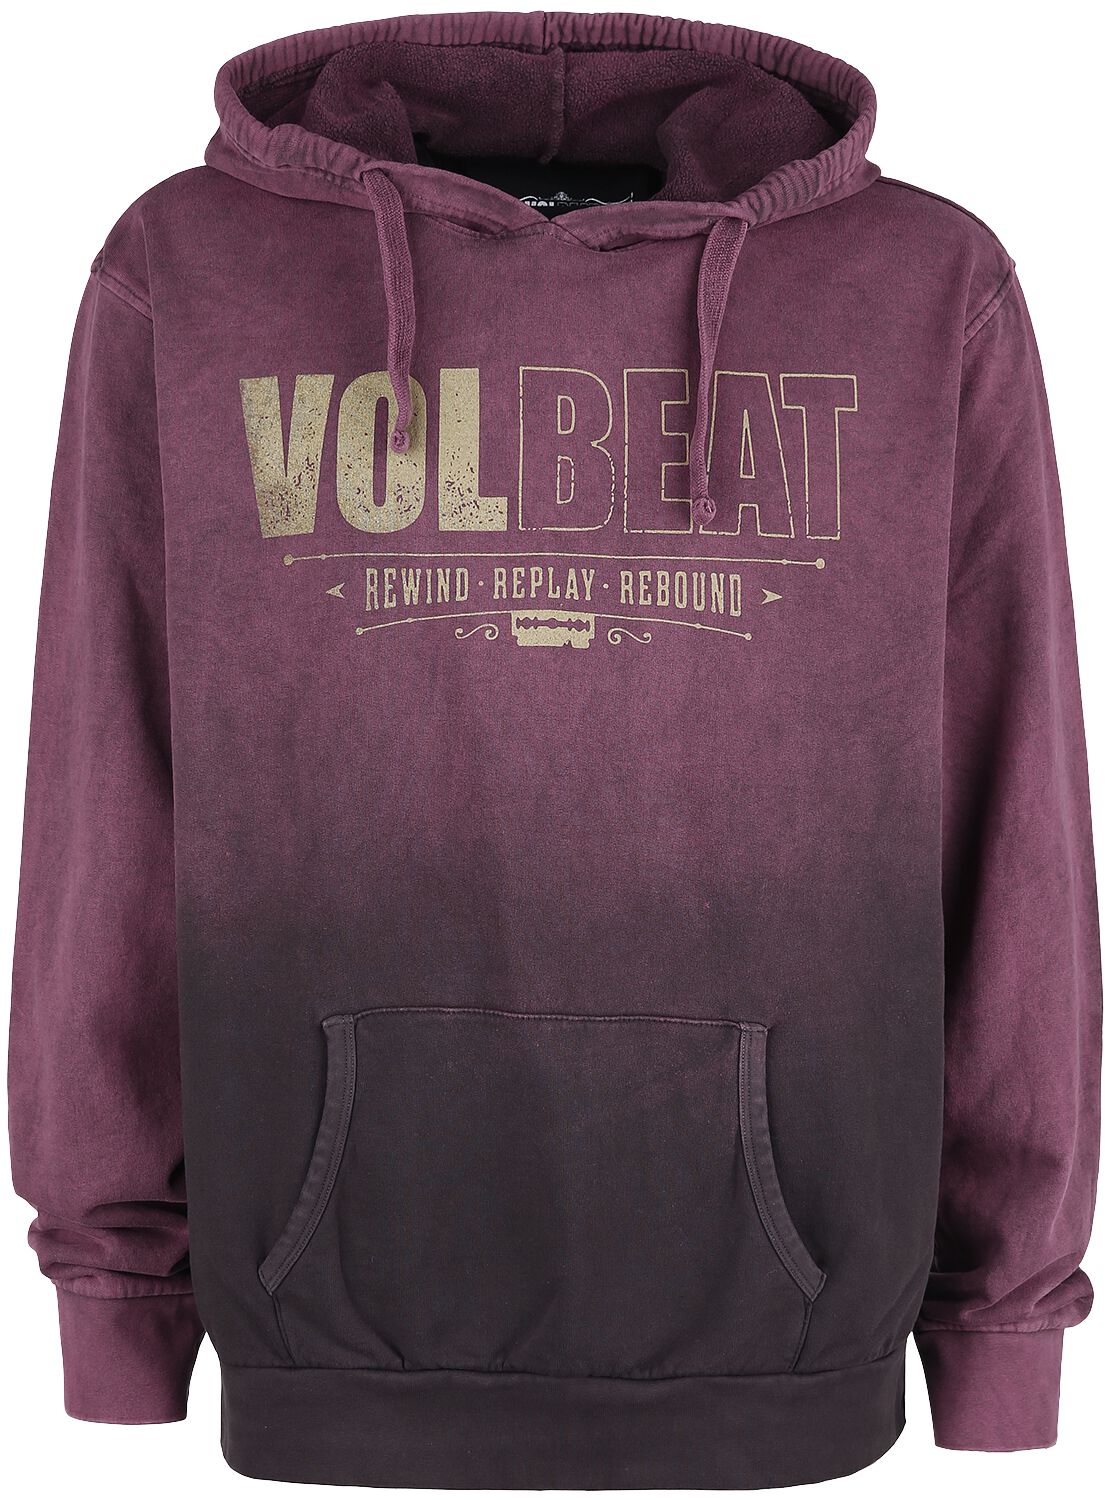 Volbeat Rewind, replay, rebound Hooded sweater wine red